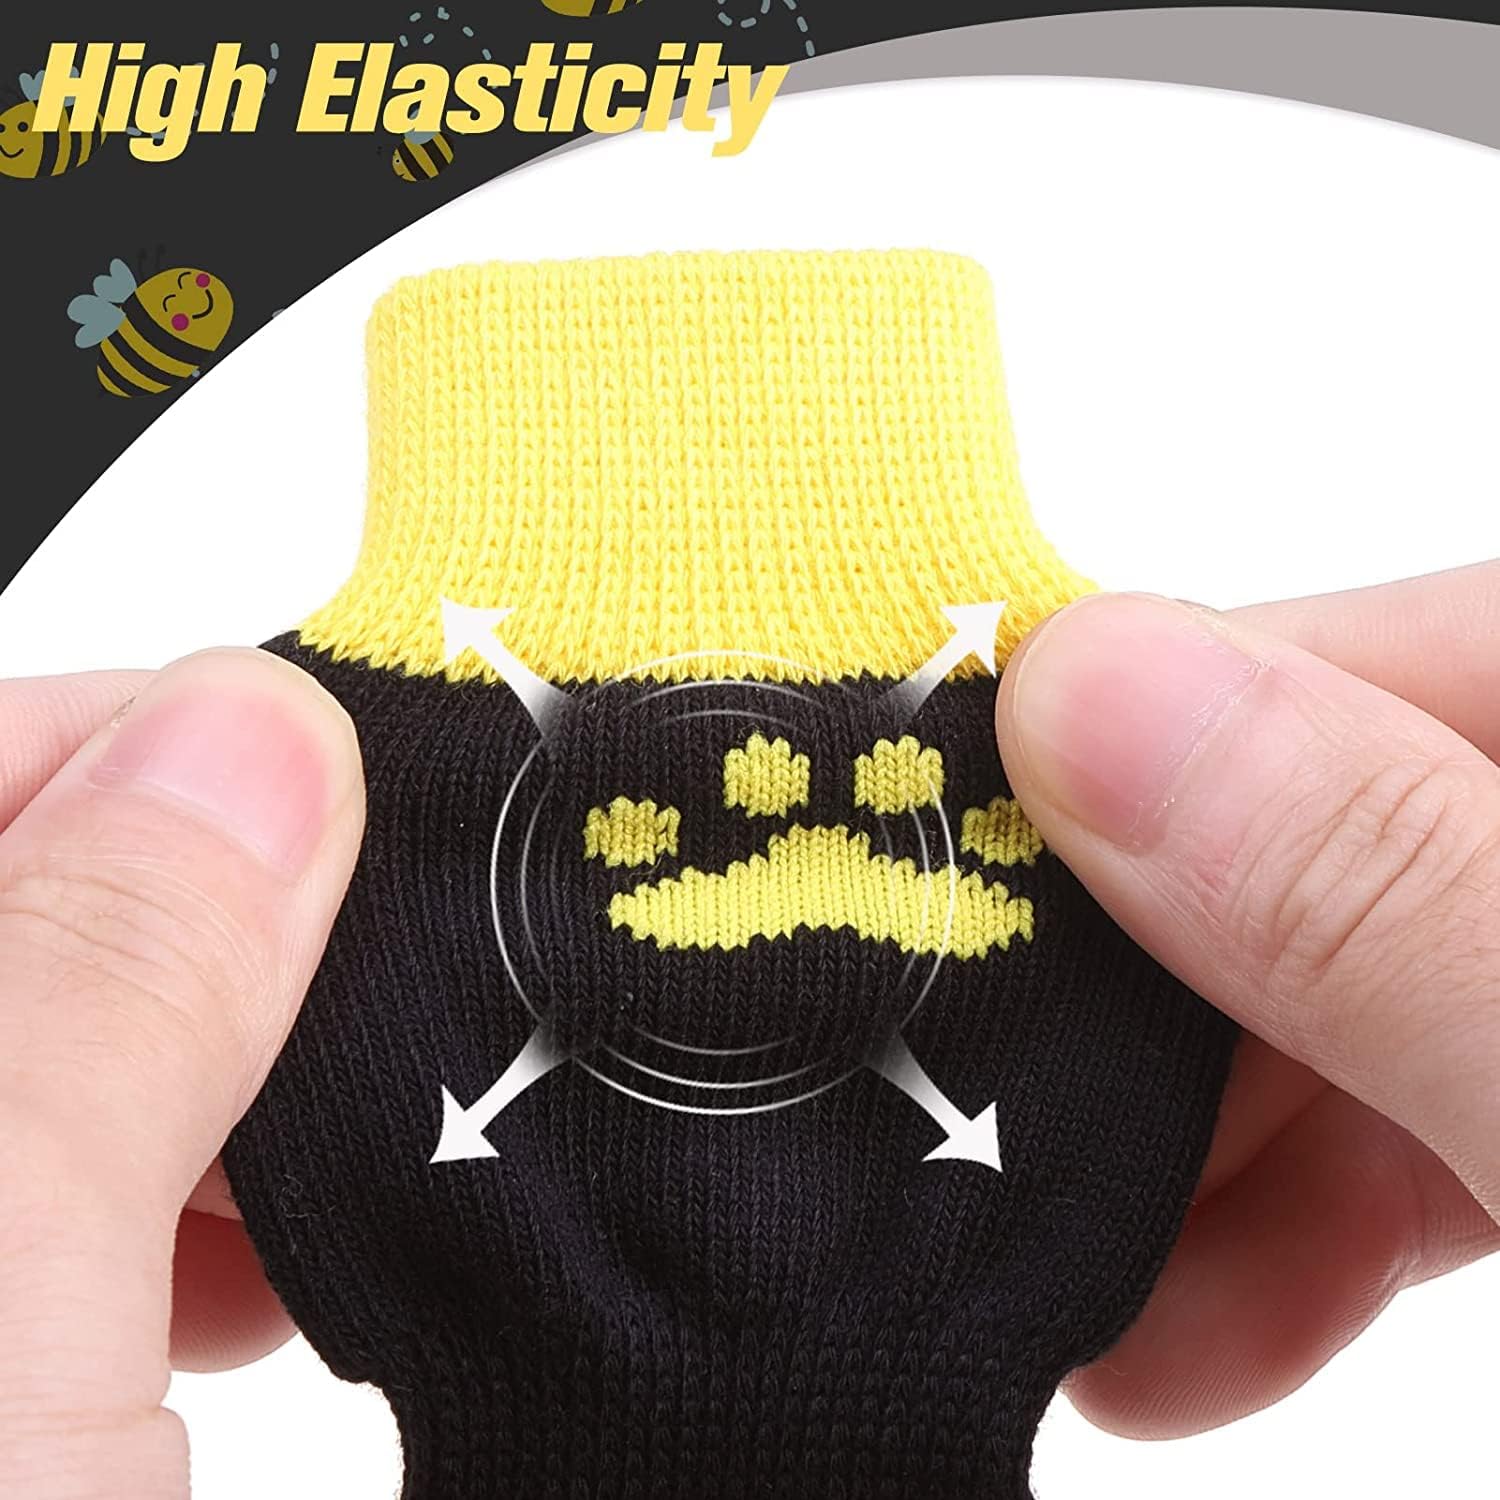 EXPAWLORER Double Side Anti-Slip Dog Socks-Bee